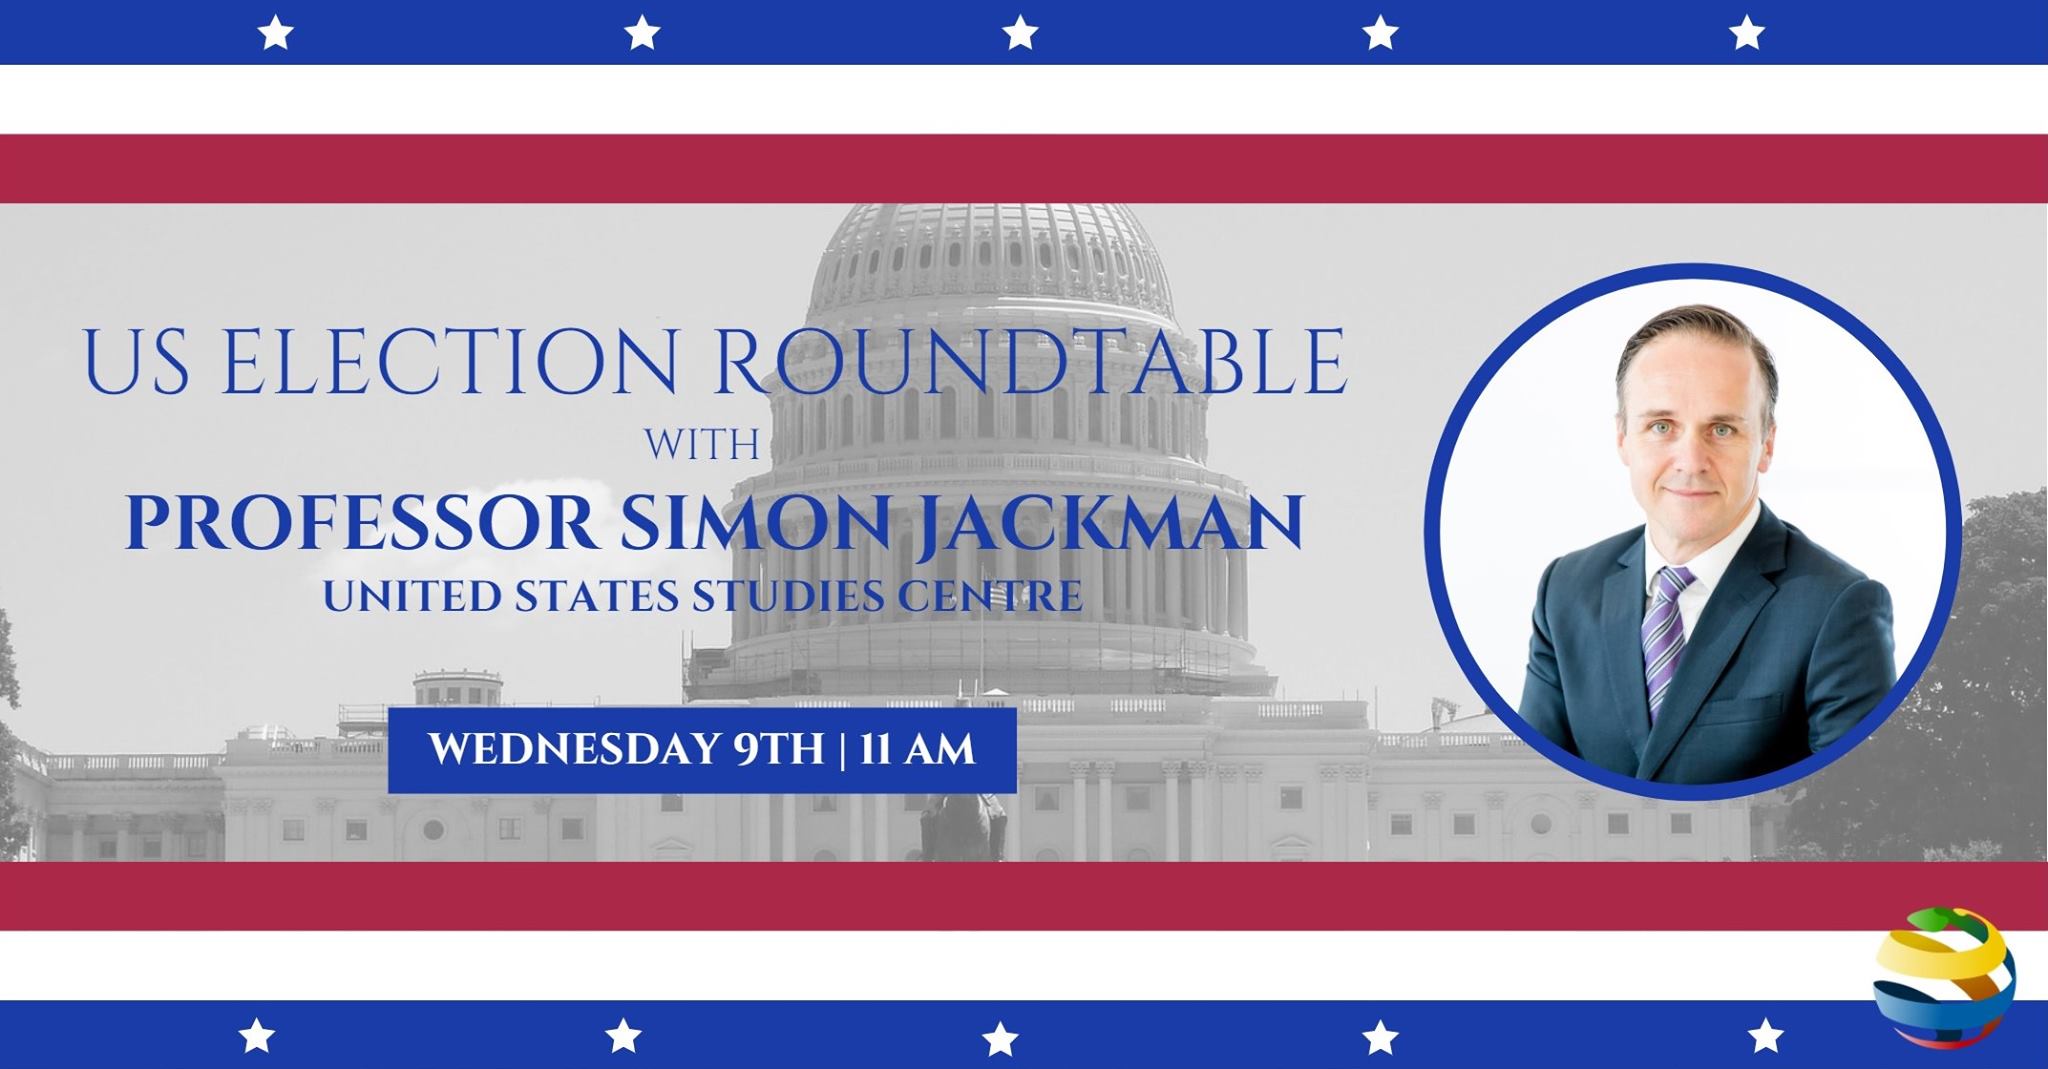 U.S. Election Roundtable with Professor Simon Jackman